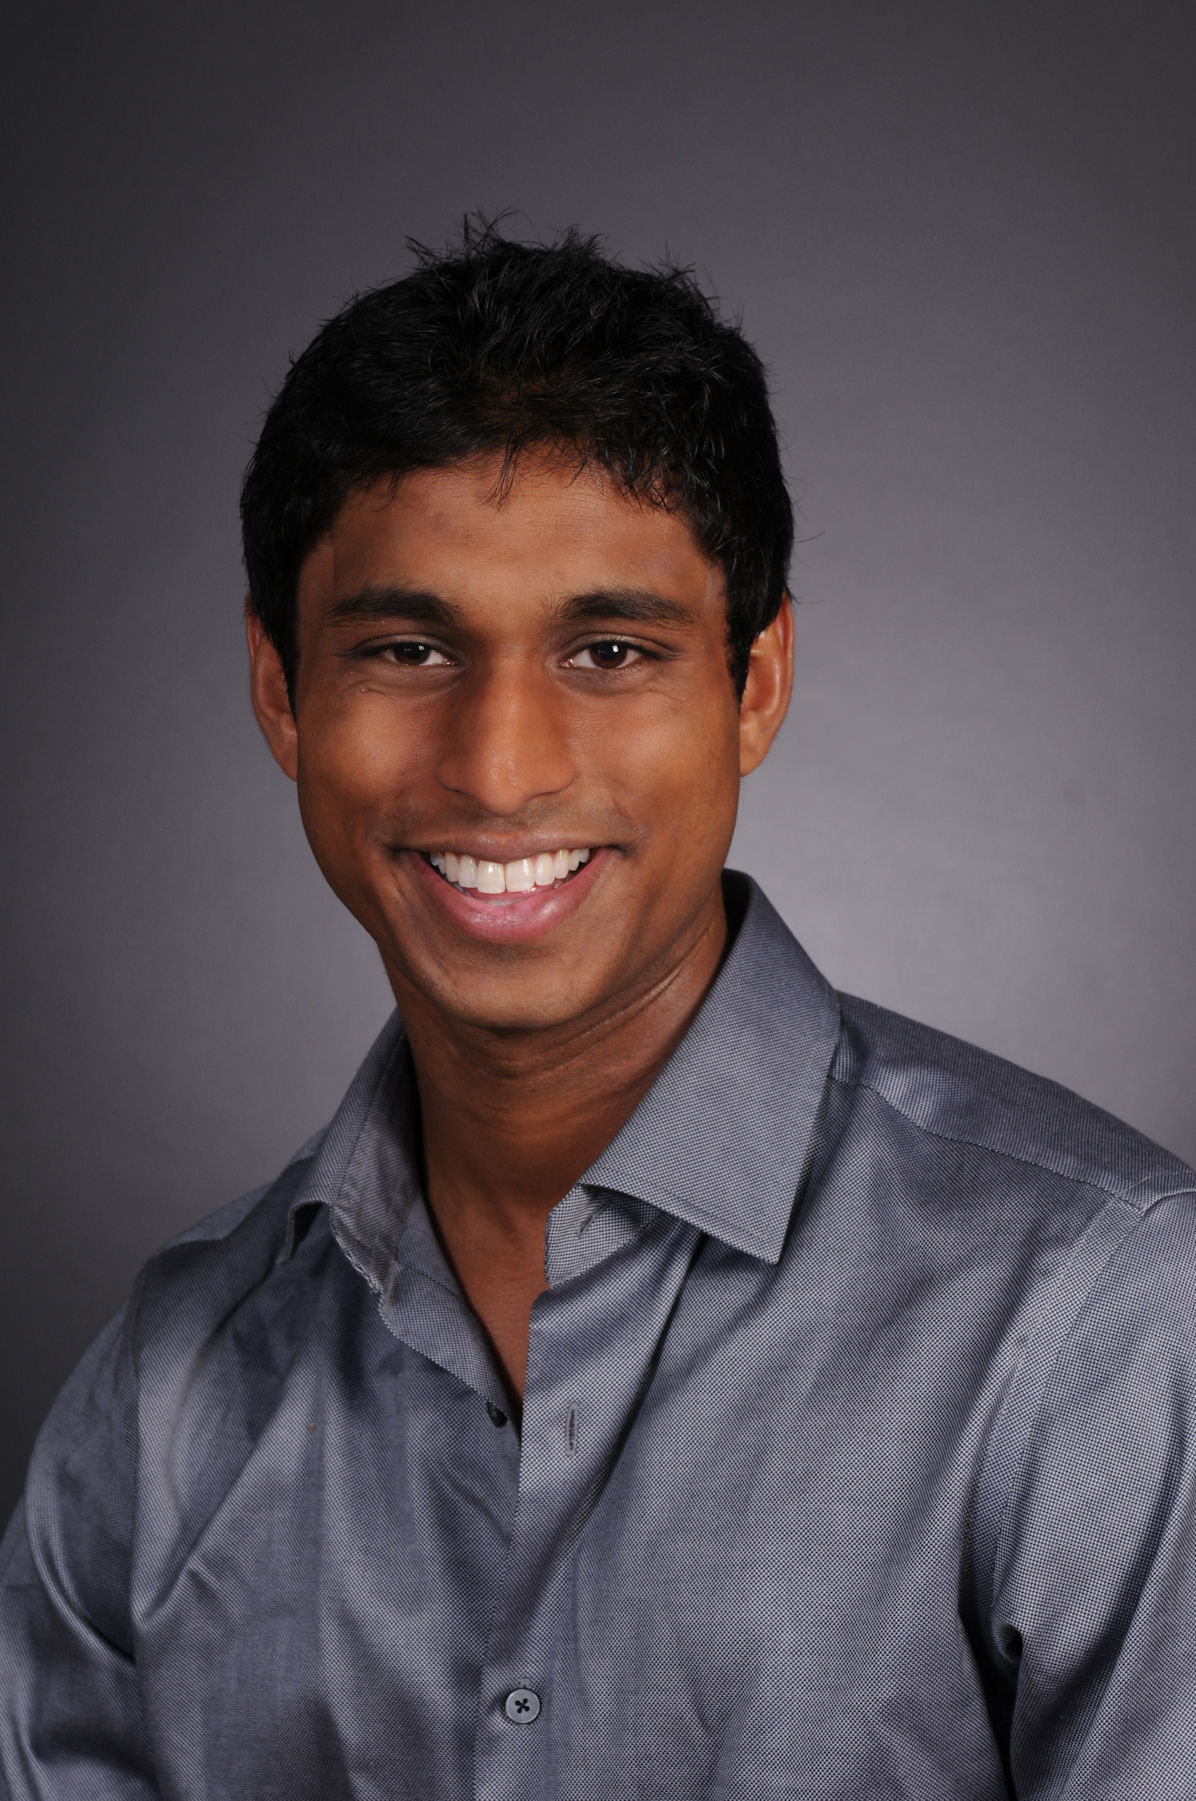 Young Entrepreneur of the Month: Ankur Jain